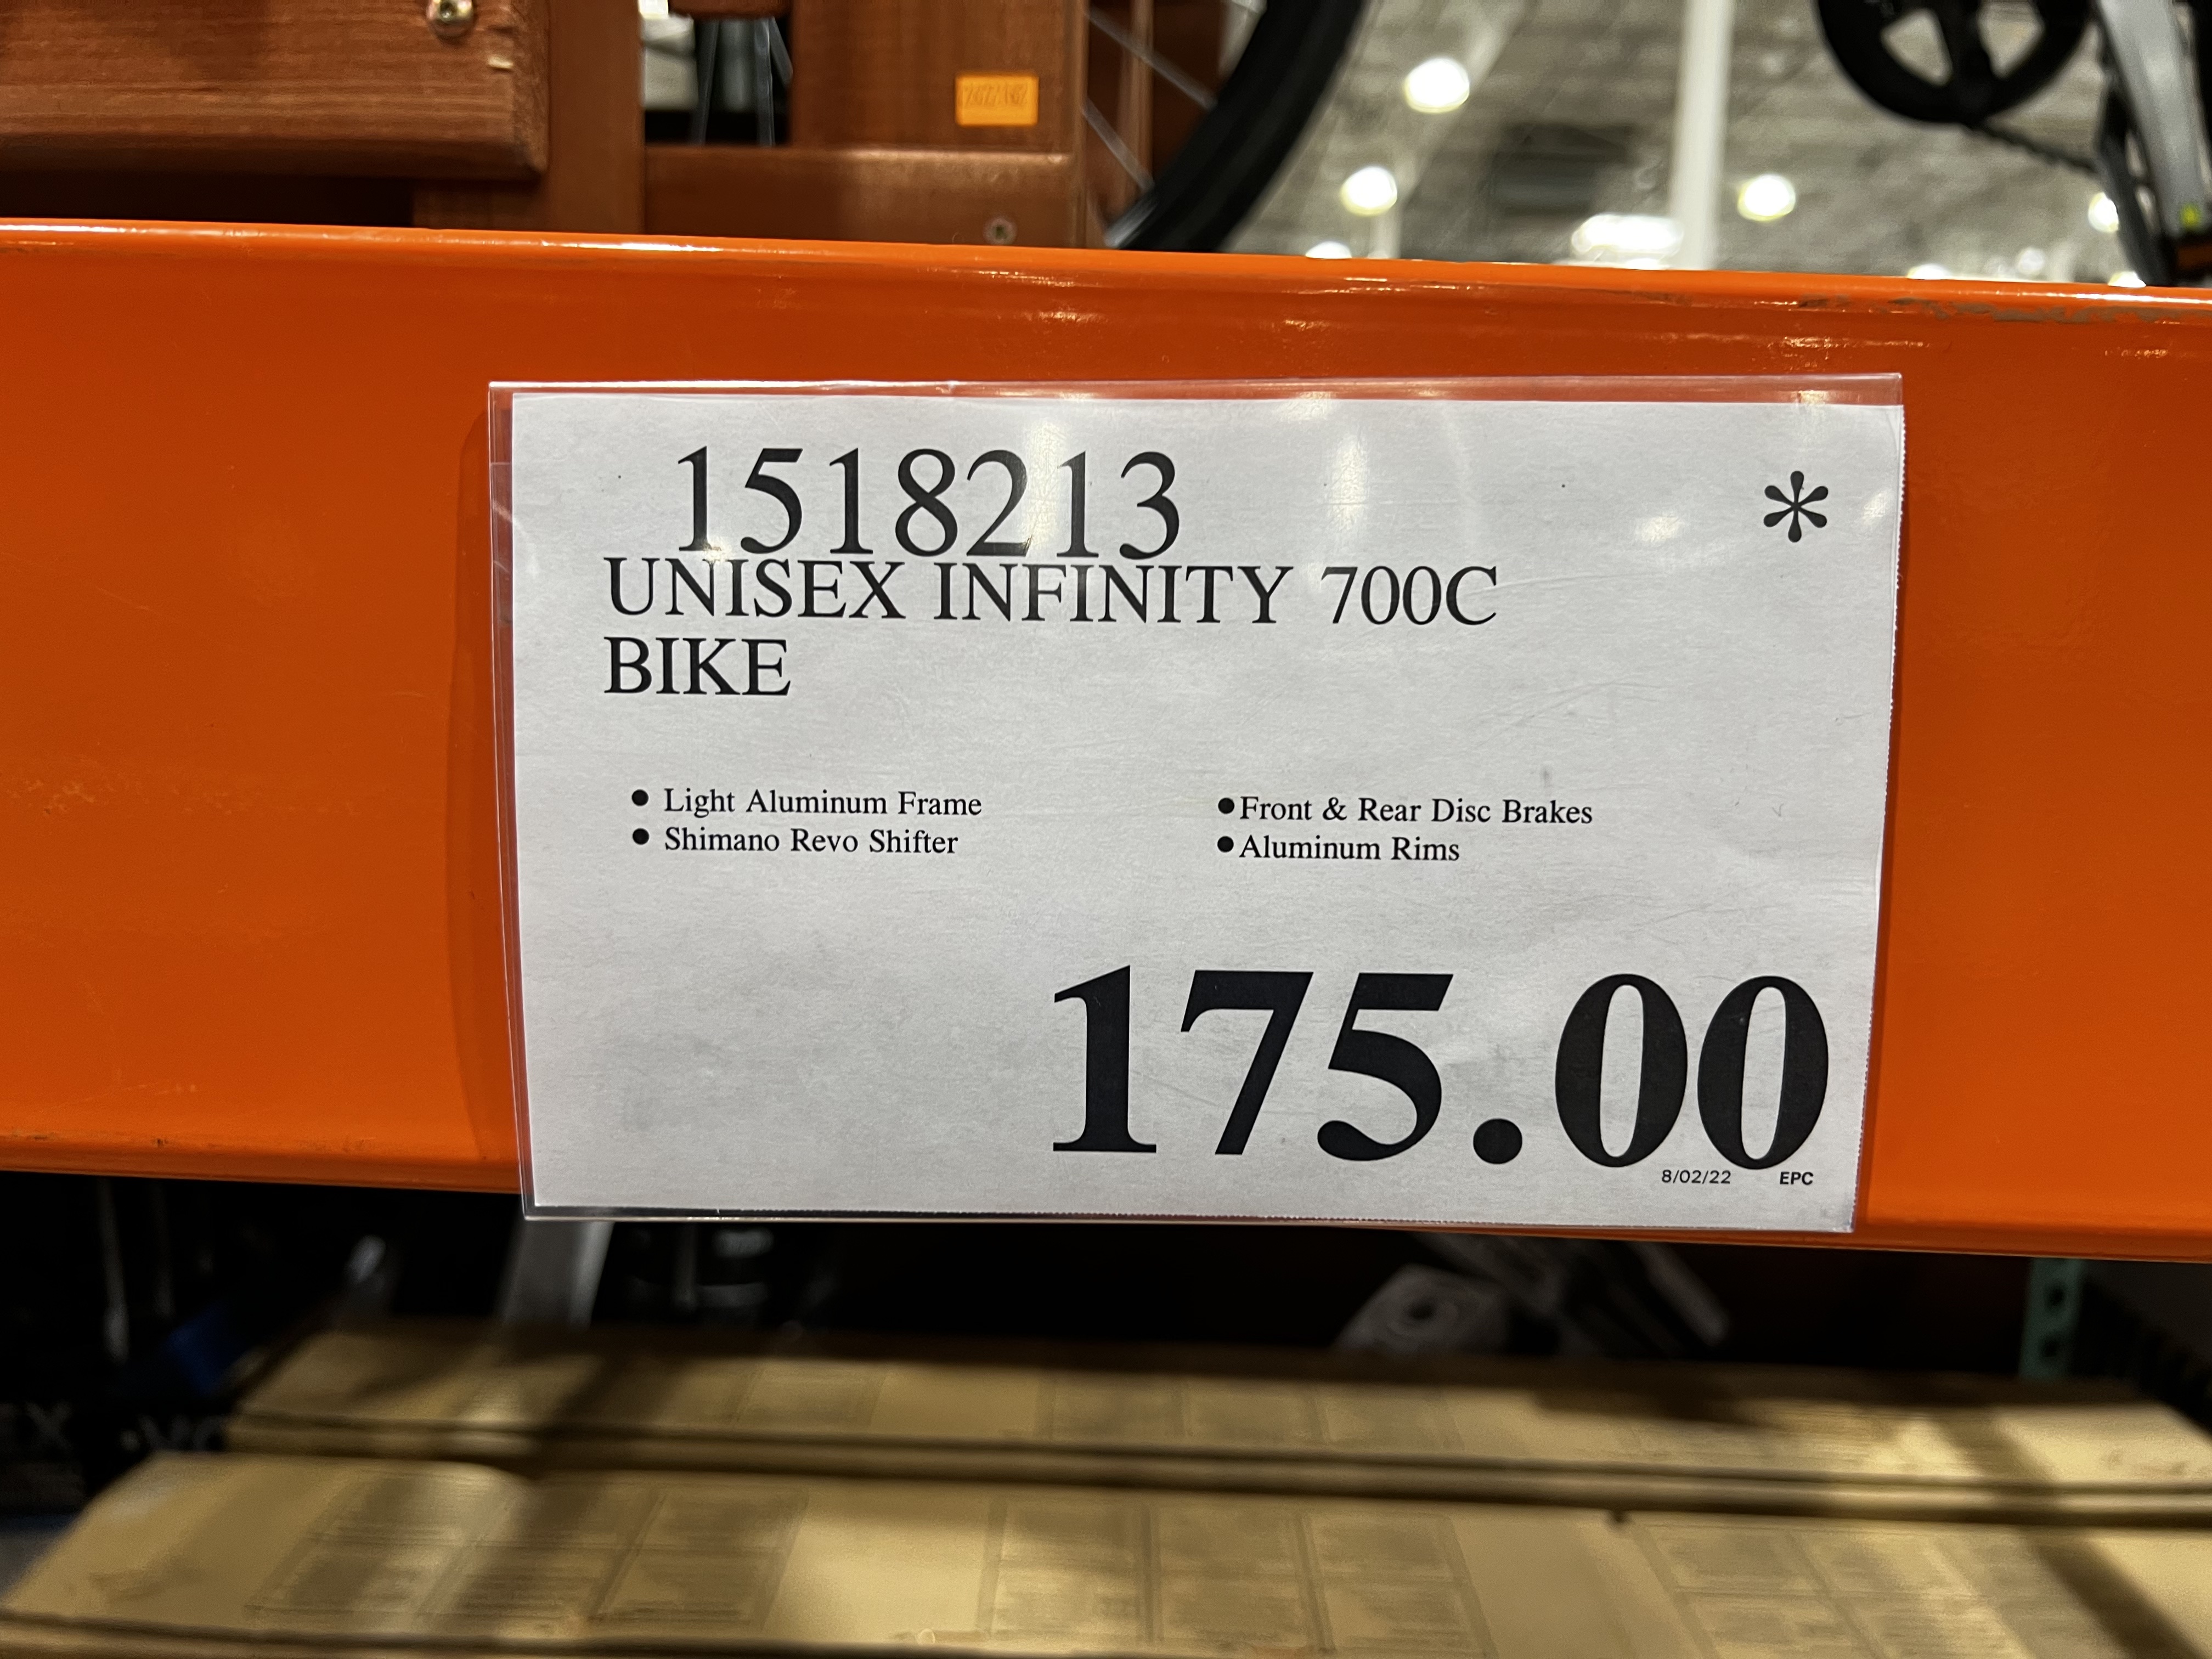 Unisex Infinity 700c bike $175 @Costco B&M - very YMMV